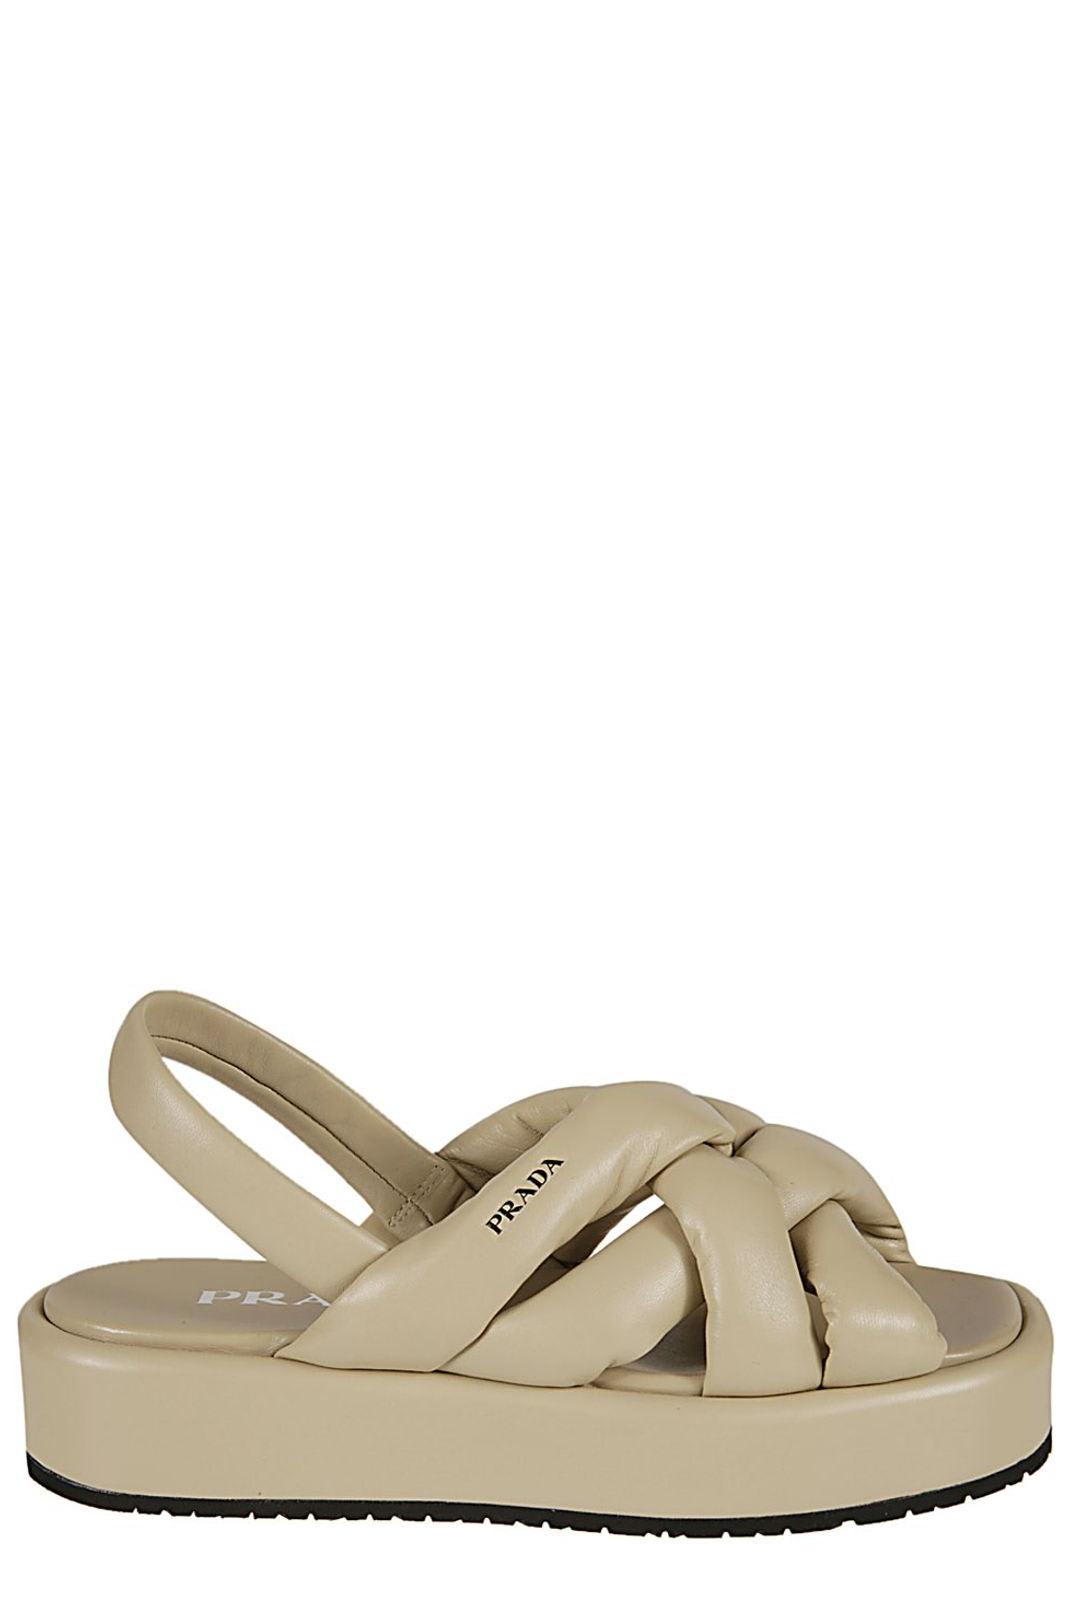 Prada Logo Printed Woven Flatform Sandals